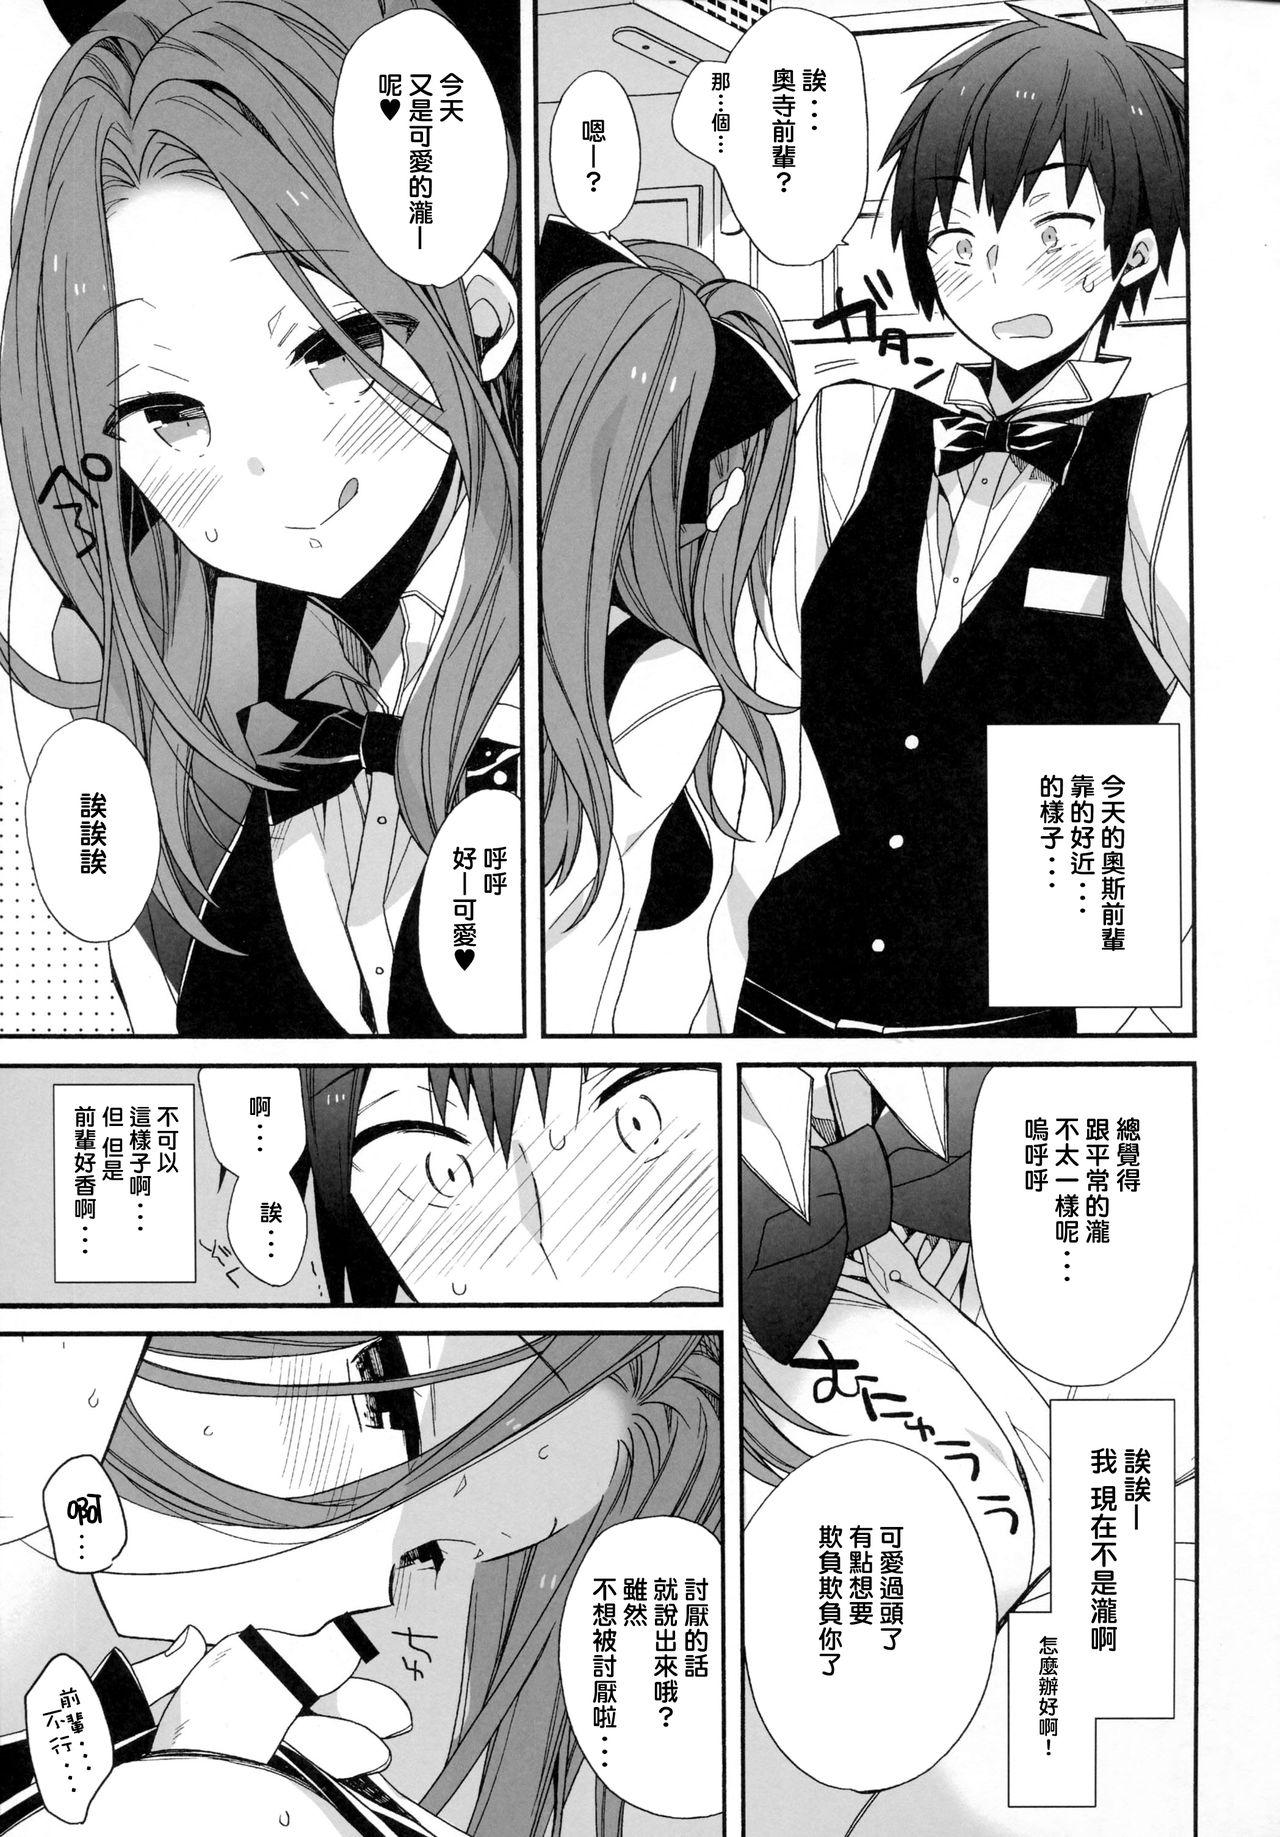 Ejaculations Yumeyume wasururu yume - Kimi no na wa. Sex Party - Page 7